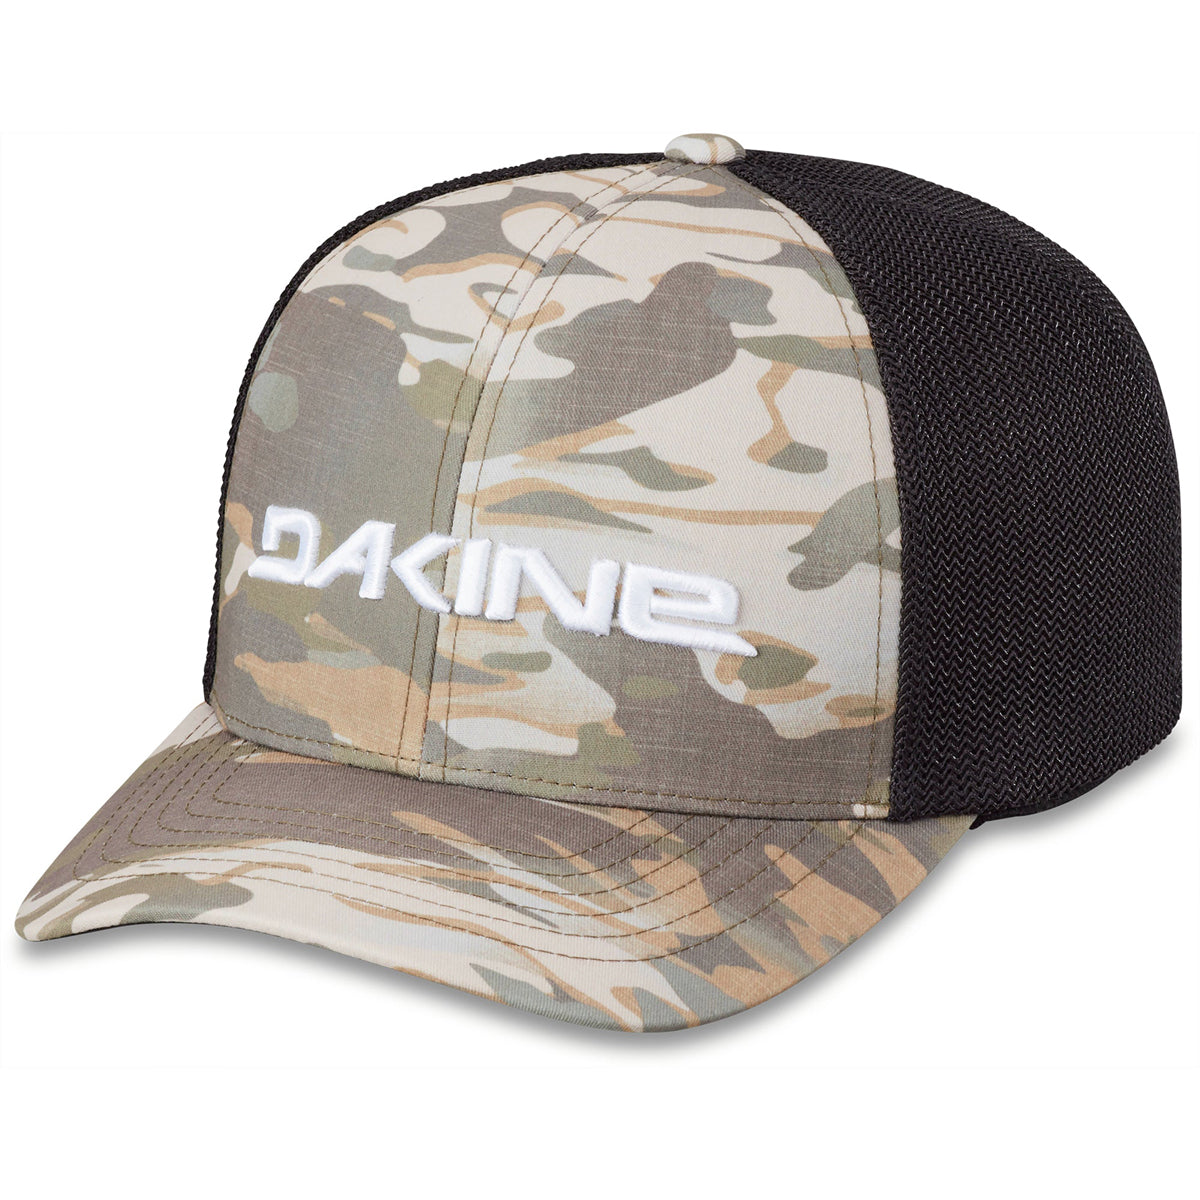 Dakine Sideline Trucker Hat - Vintage Camo image 1